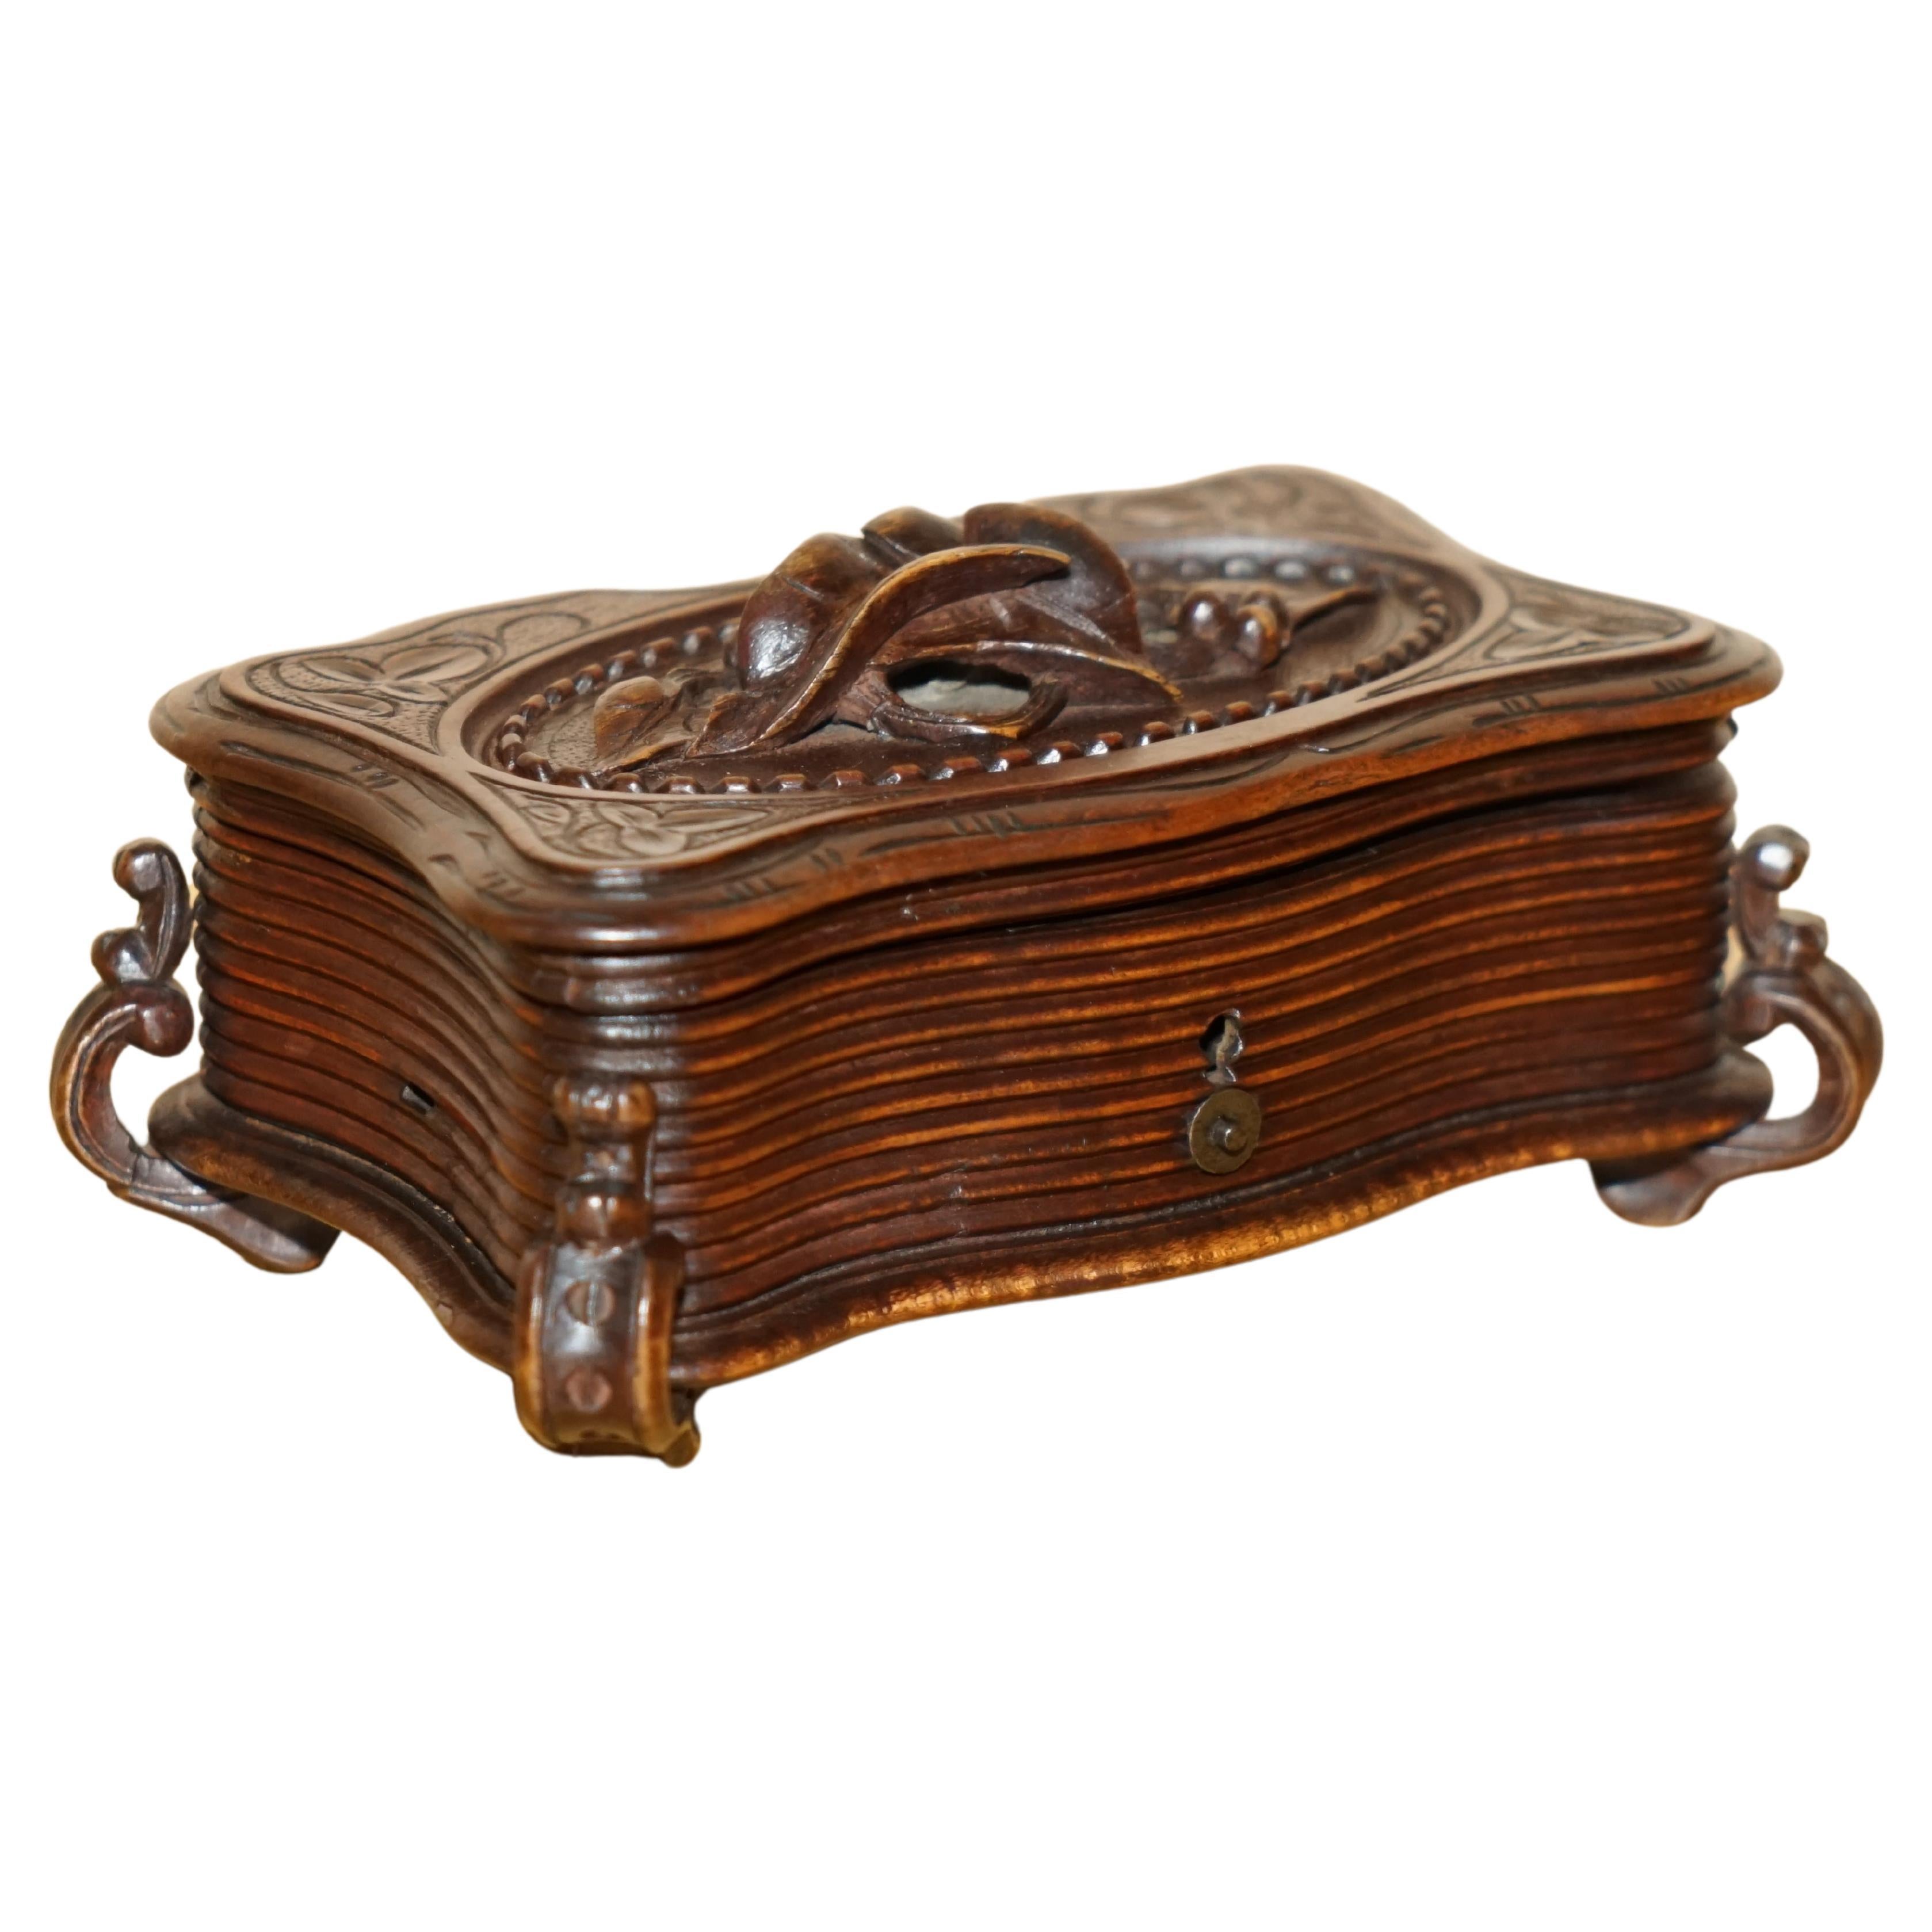 Stunning Original Antique Hand Carved Black Forest Wood Music Box Needs Service